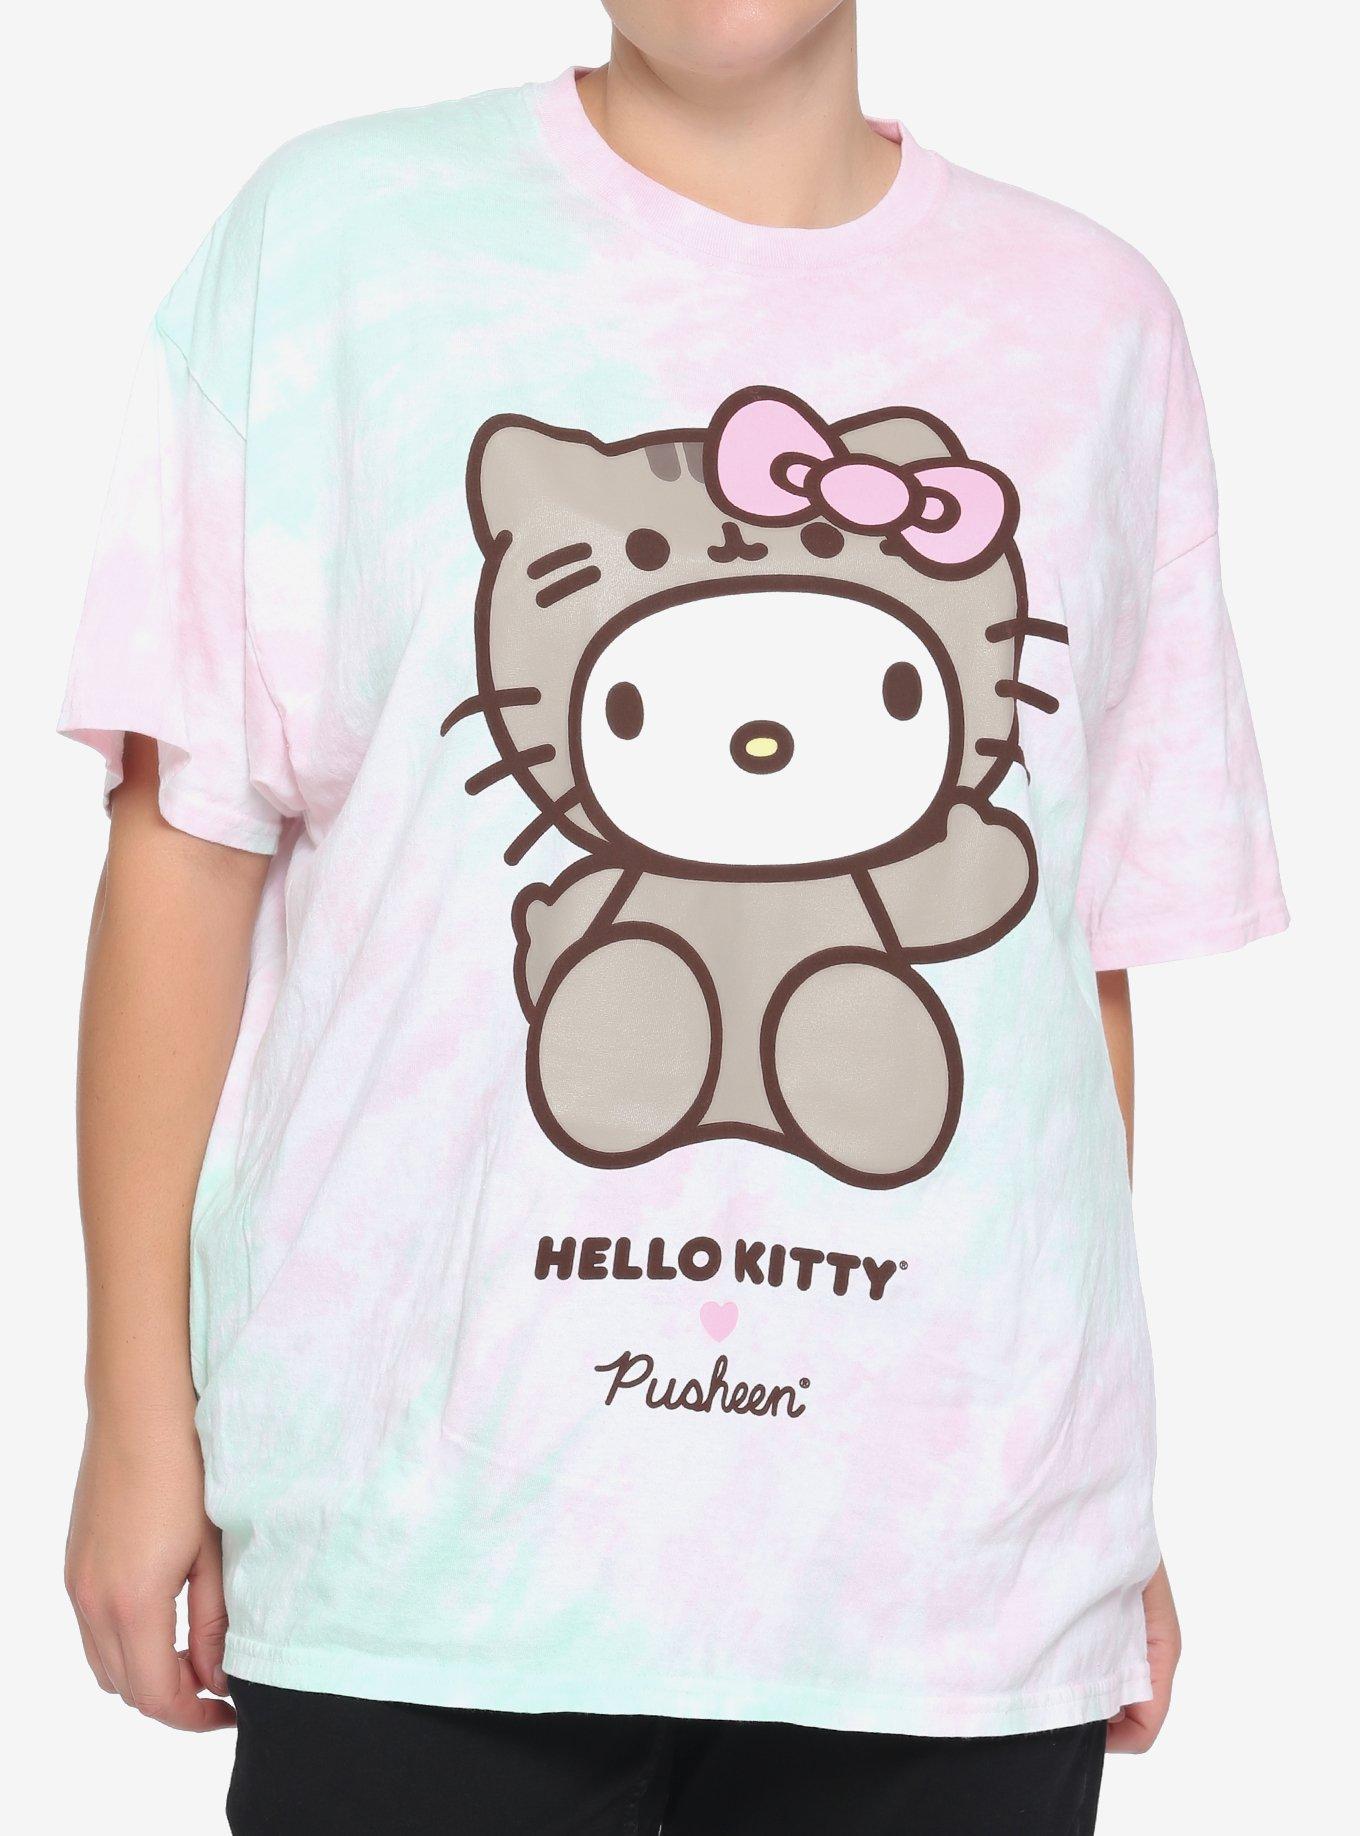 Hello Kitty X Pusheen Tie-Dye Boyfriend Fit Girls T-Shirt Plus Size